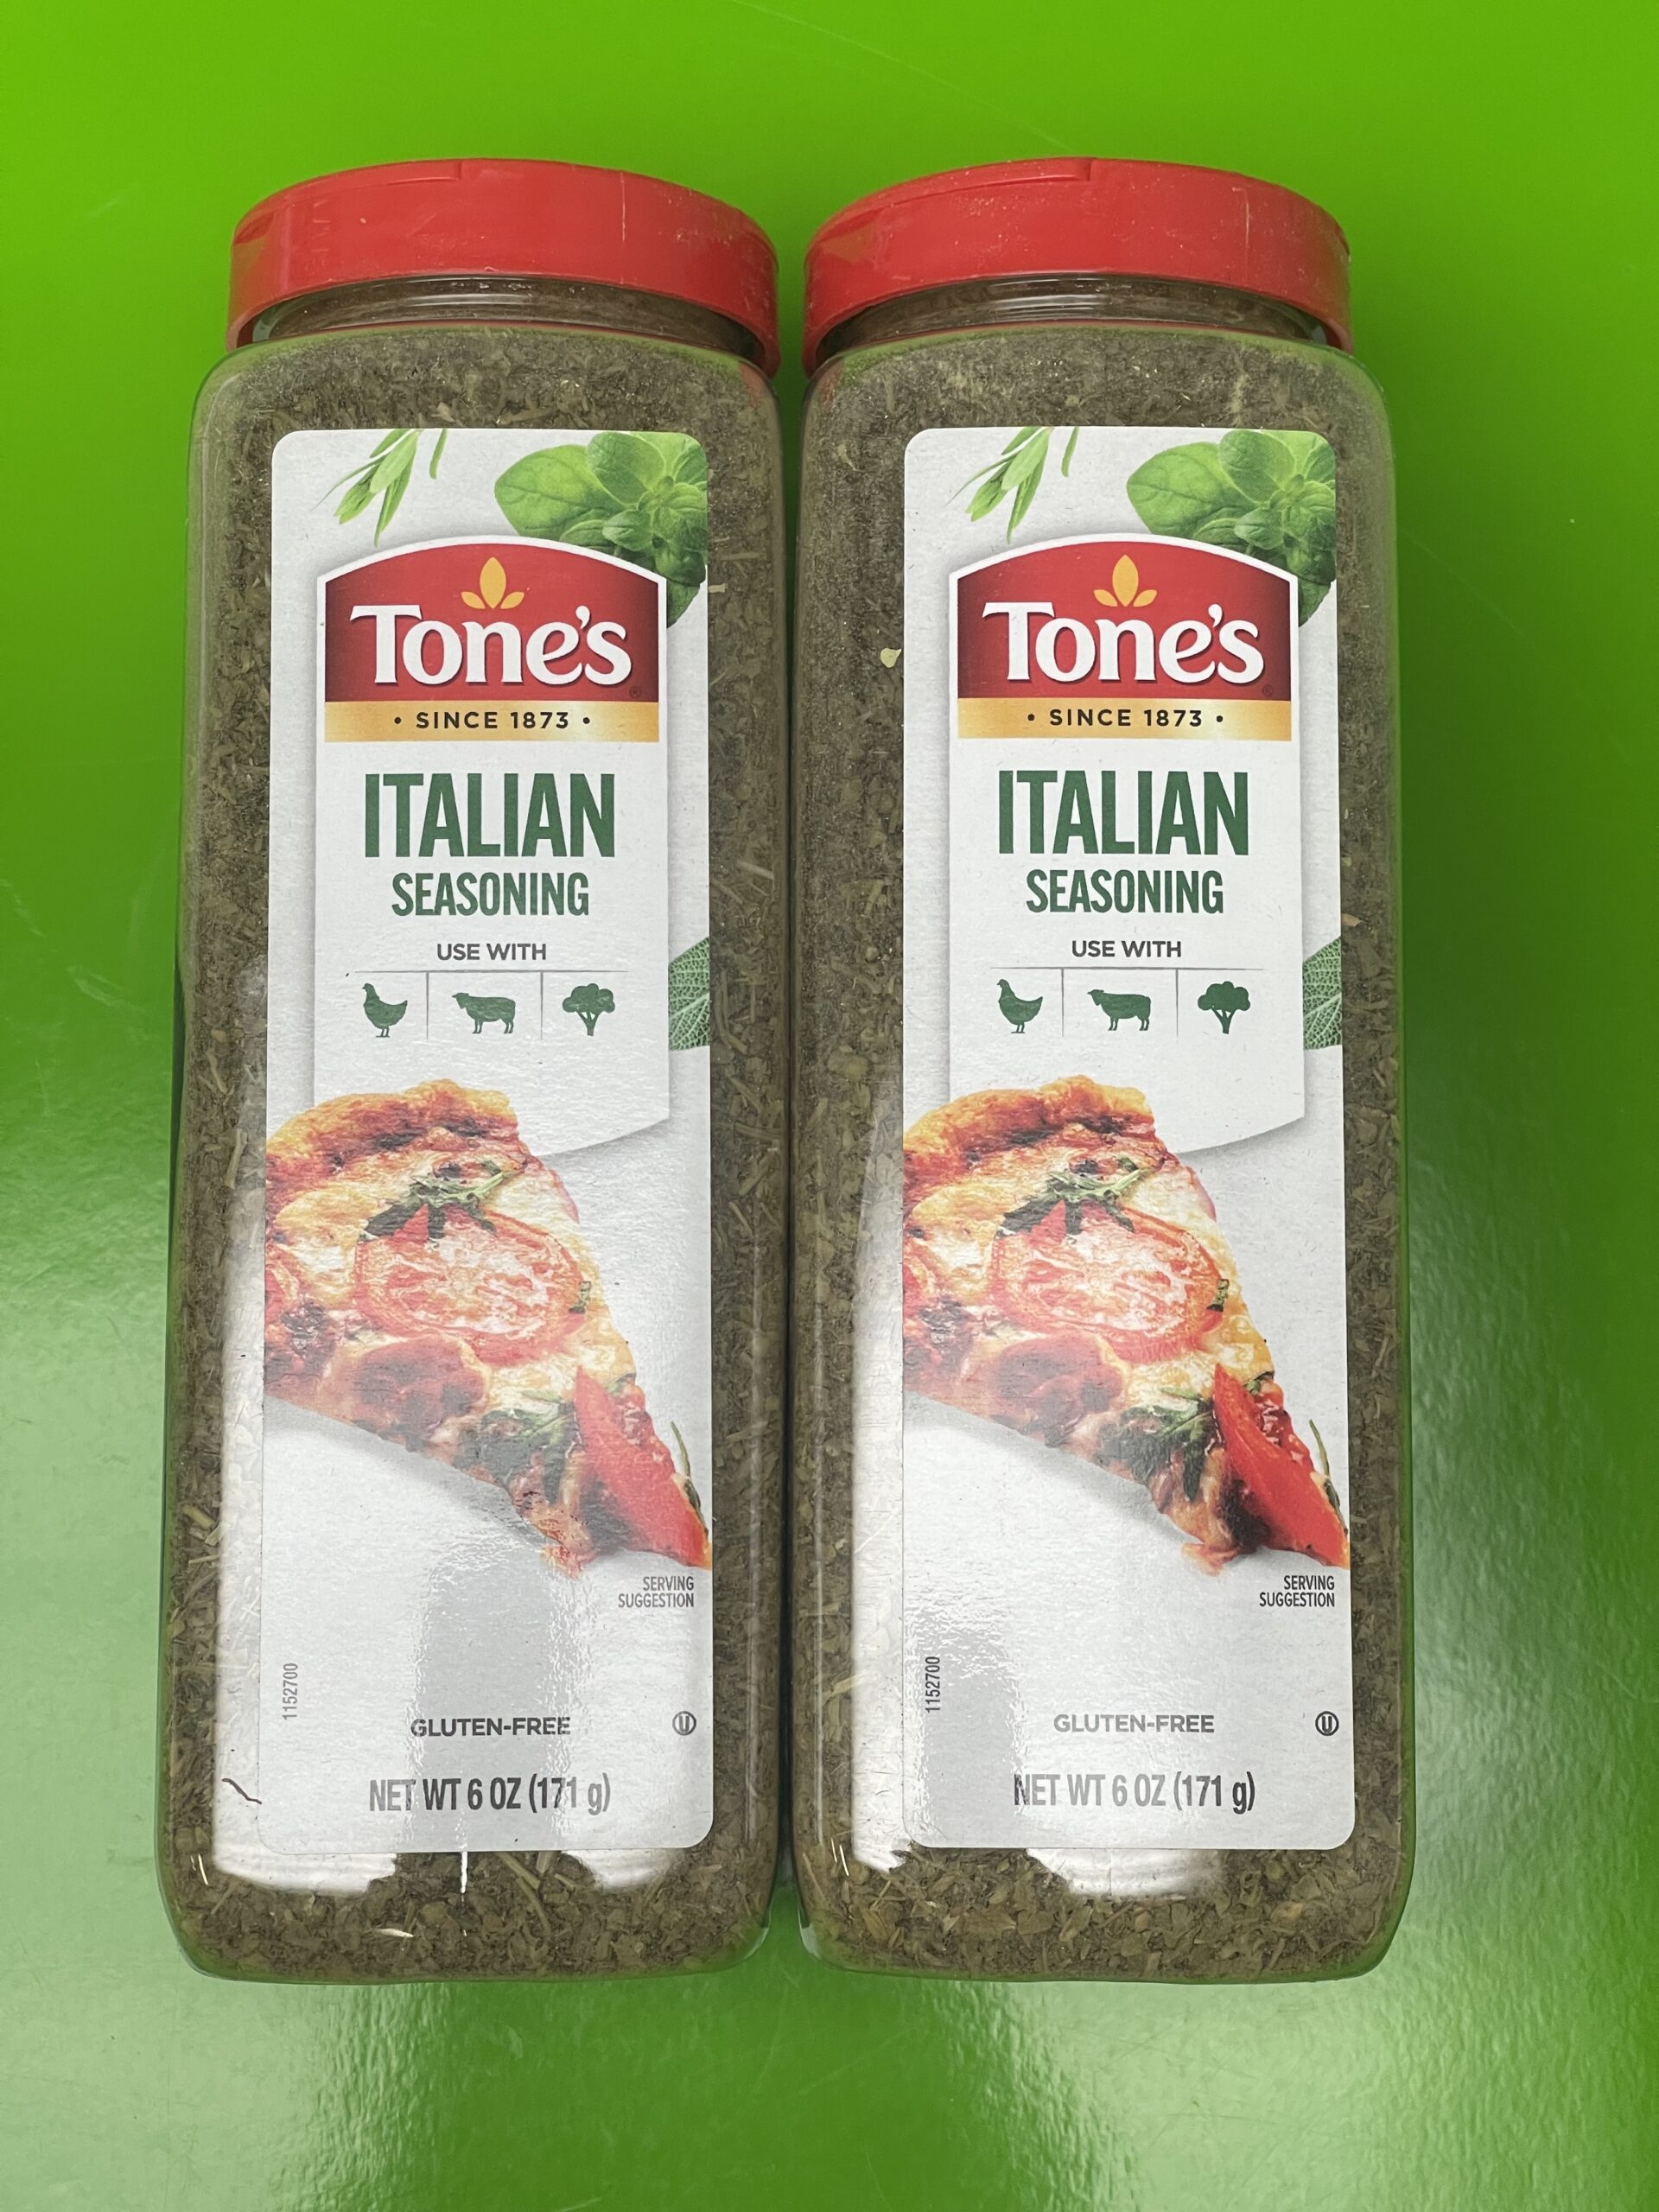 Tone's Italian Spaghetti Seasoning Blend (14 Ounce)